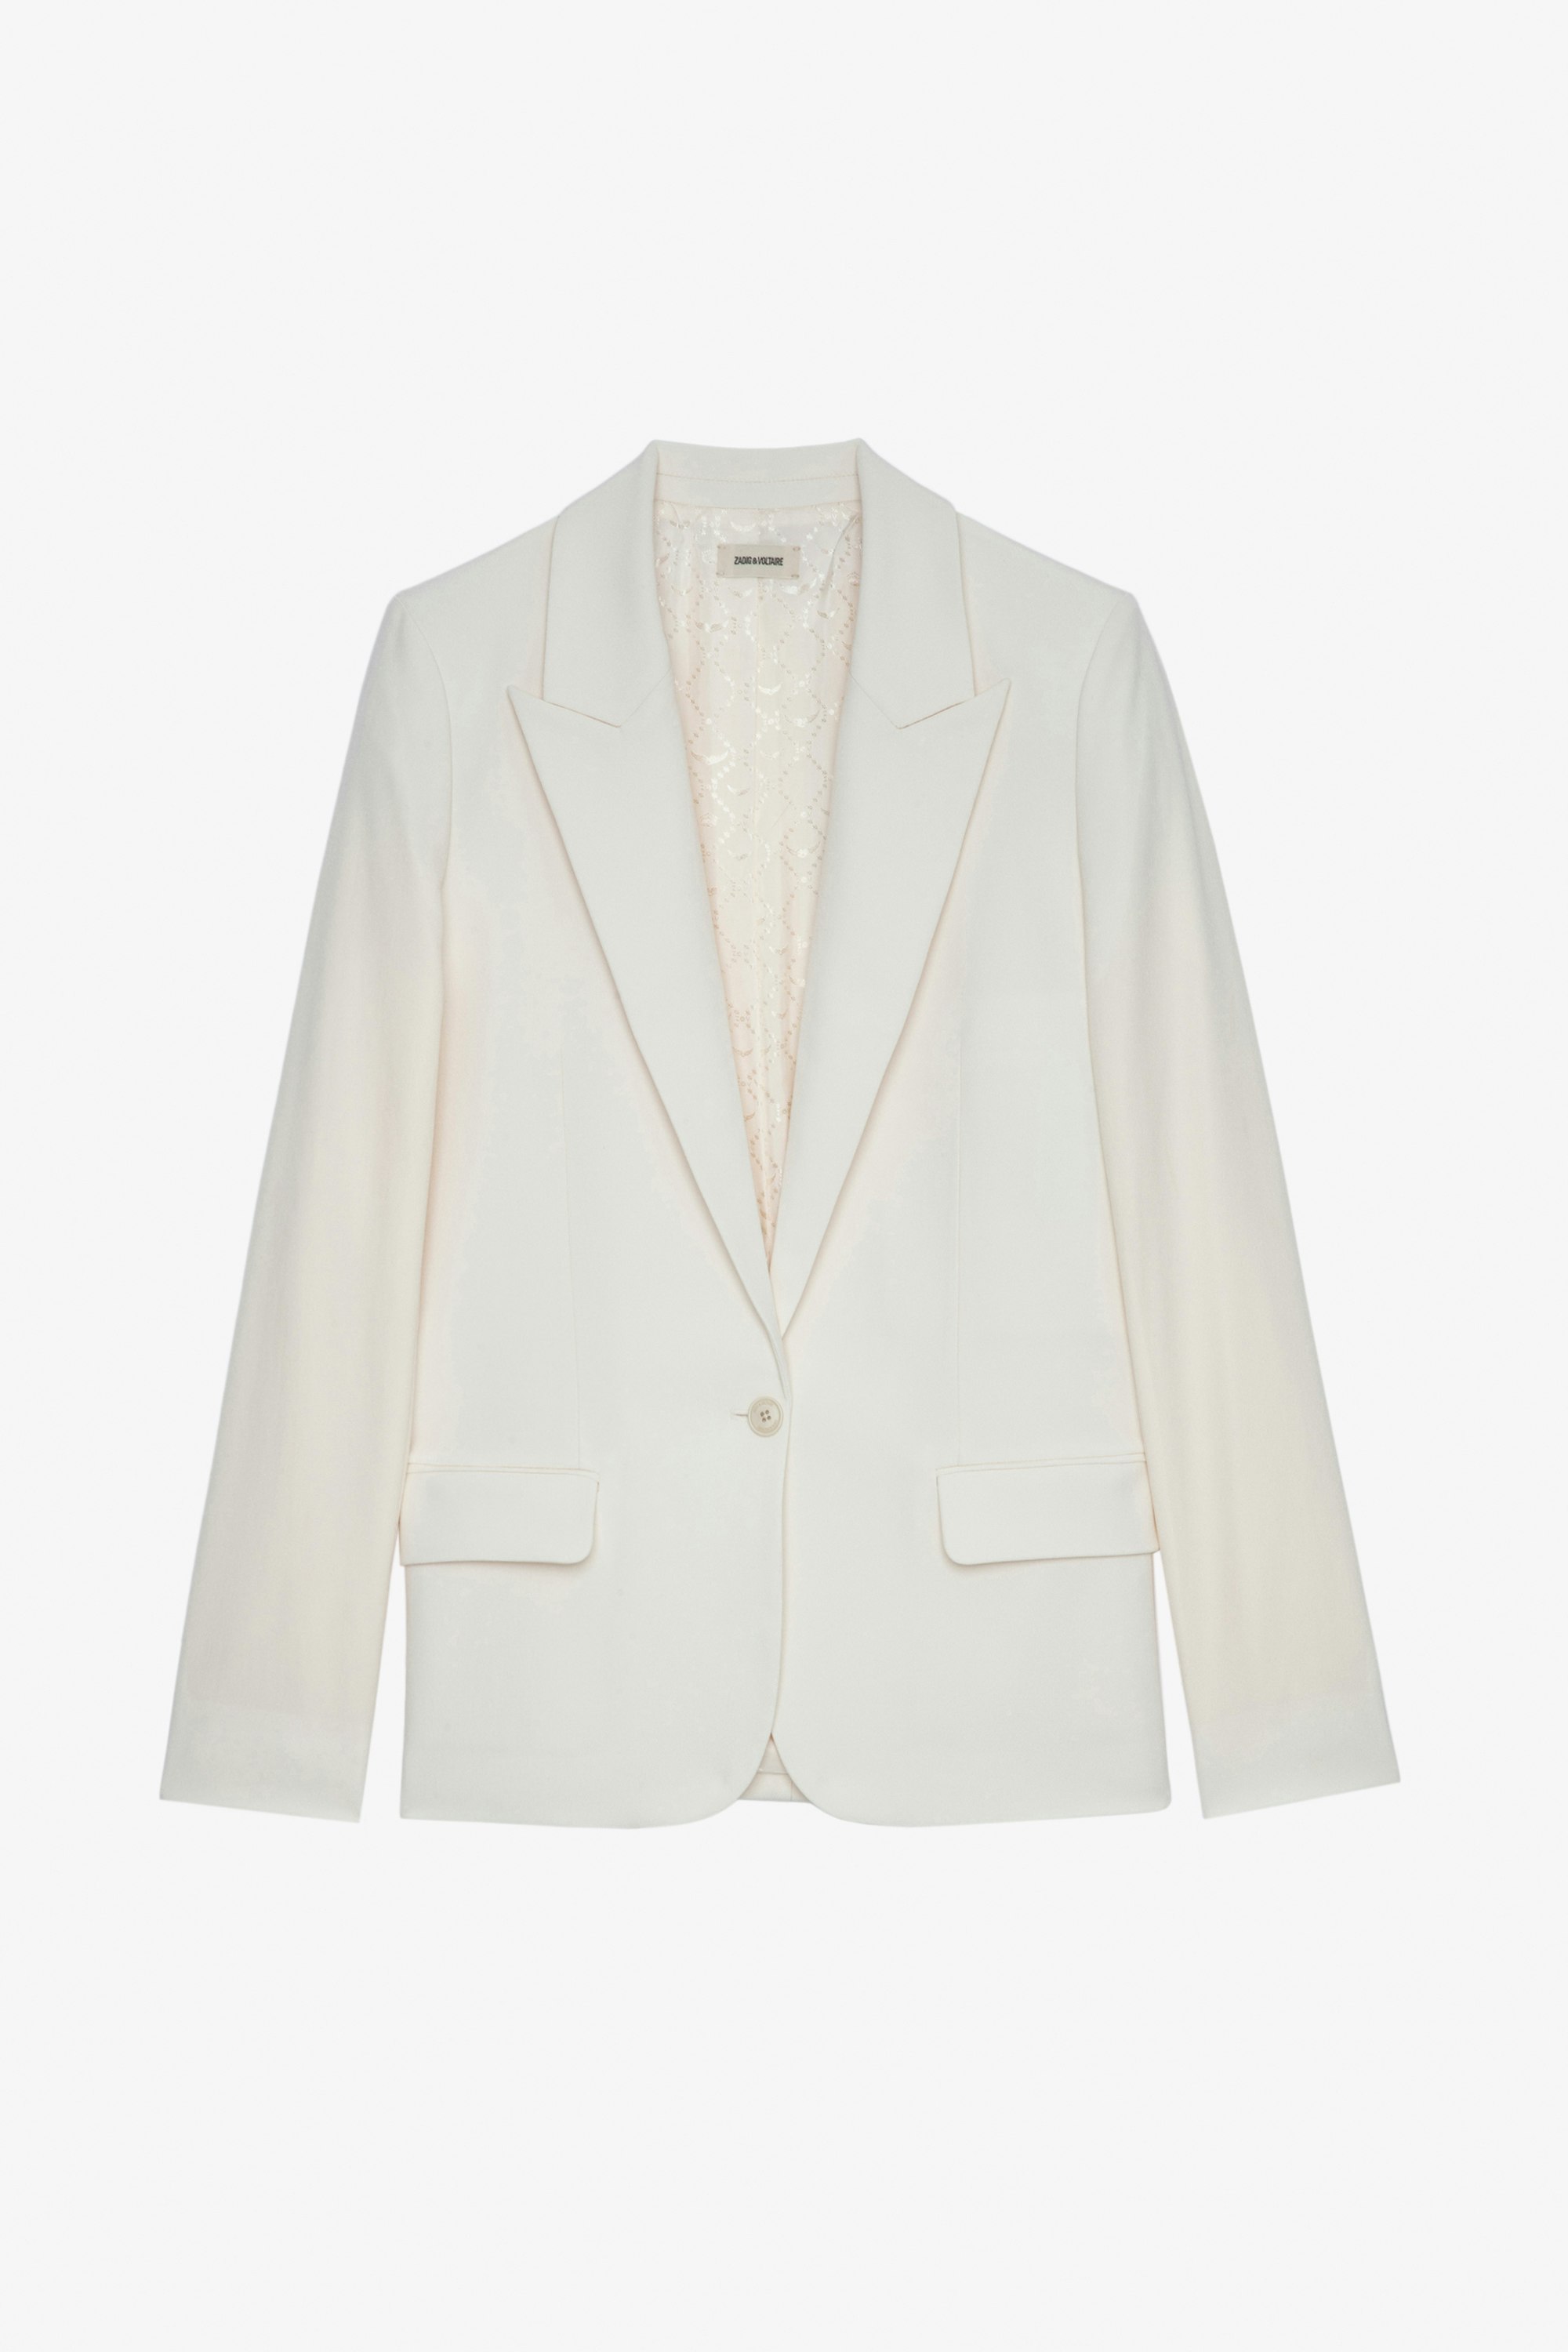 Voyage Blazer - Women’s white tailored jacket